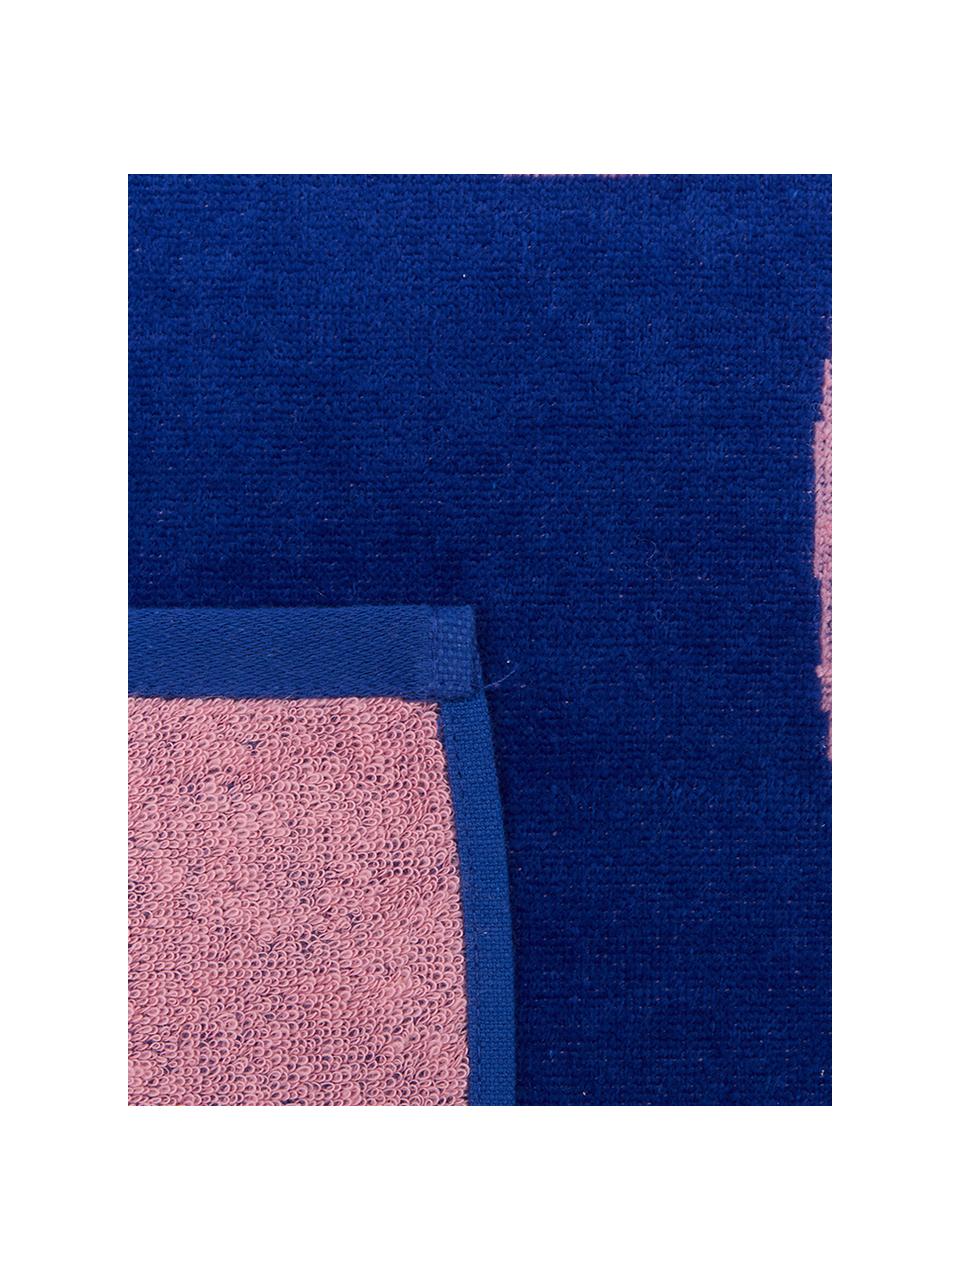 Telo mare Mingo, Cotone
Qualità leggera 380 g/m², Blu, rosa, Larg. 80 x Lung. 160 cm